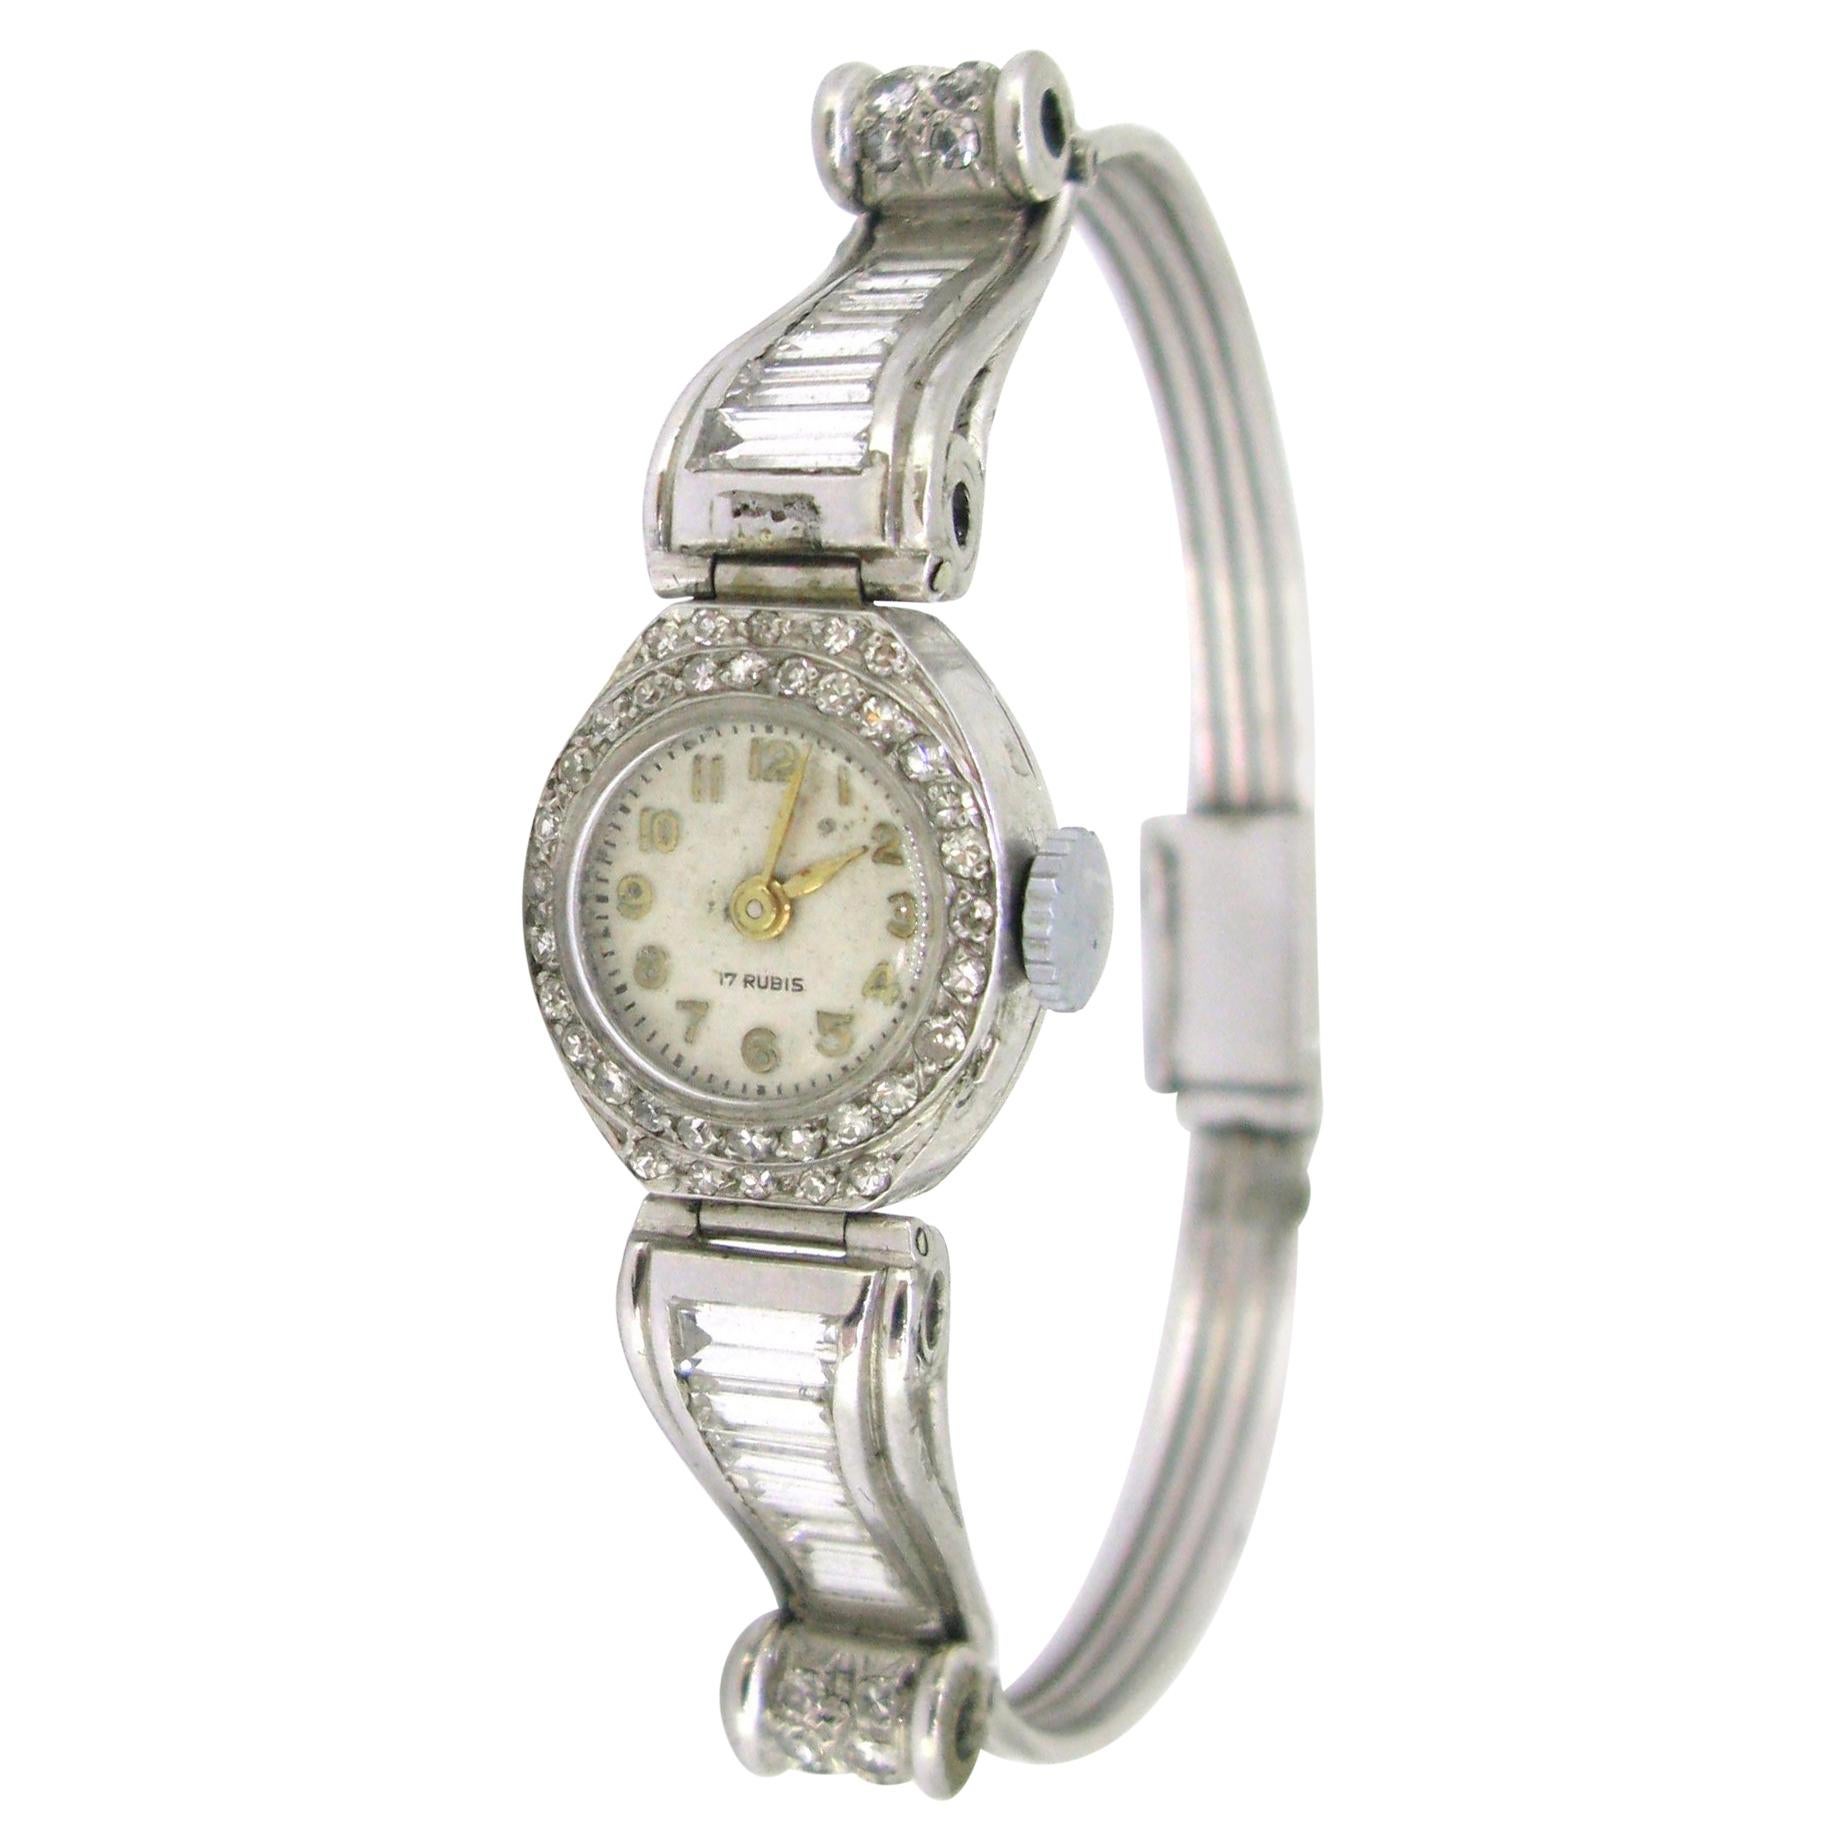 Art Deco Lady Diamond Manual Wind Wristwatch, 18kt Wt Gold & Plat, France, c1935